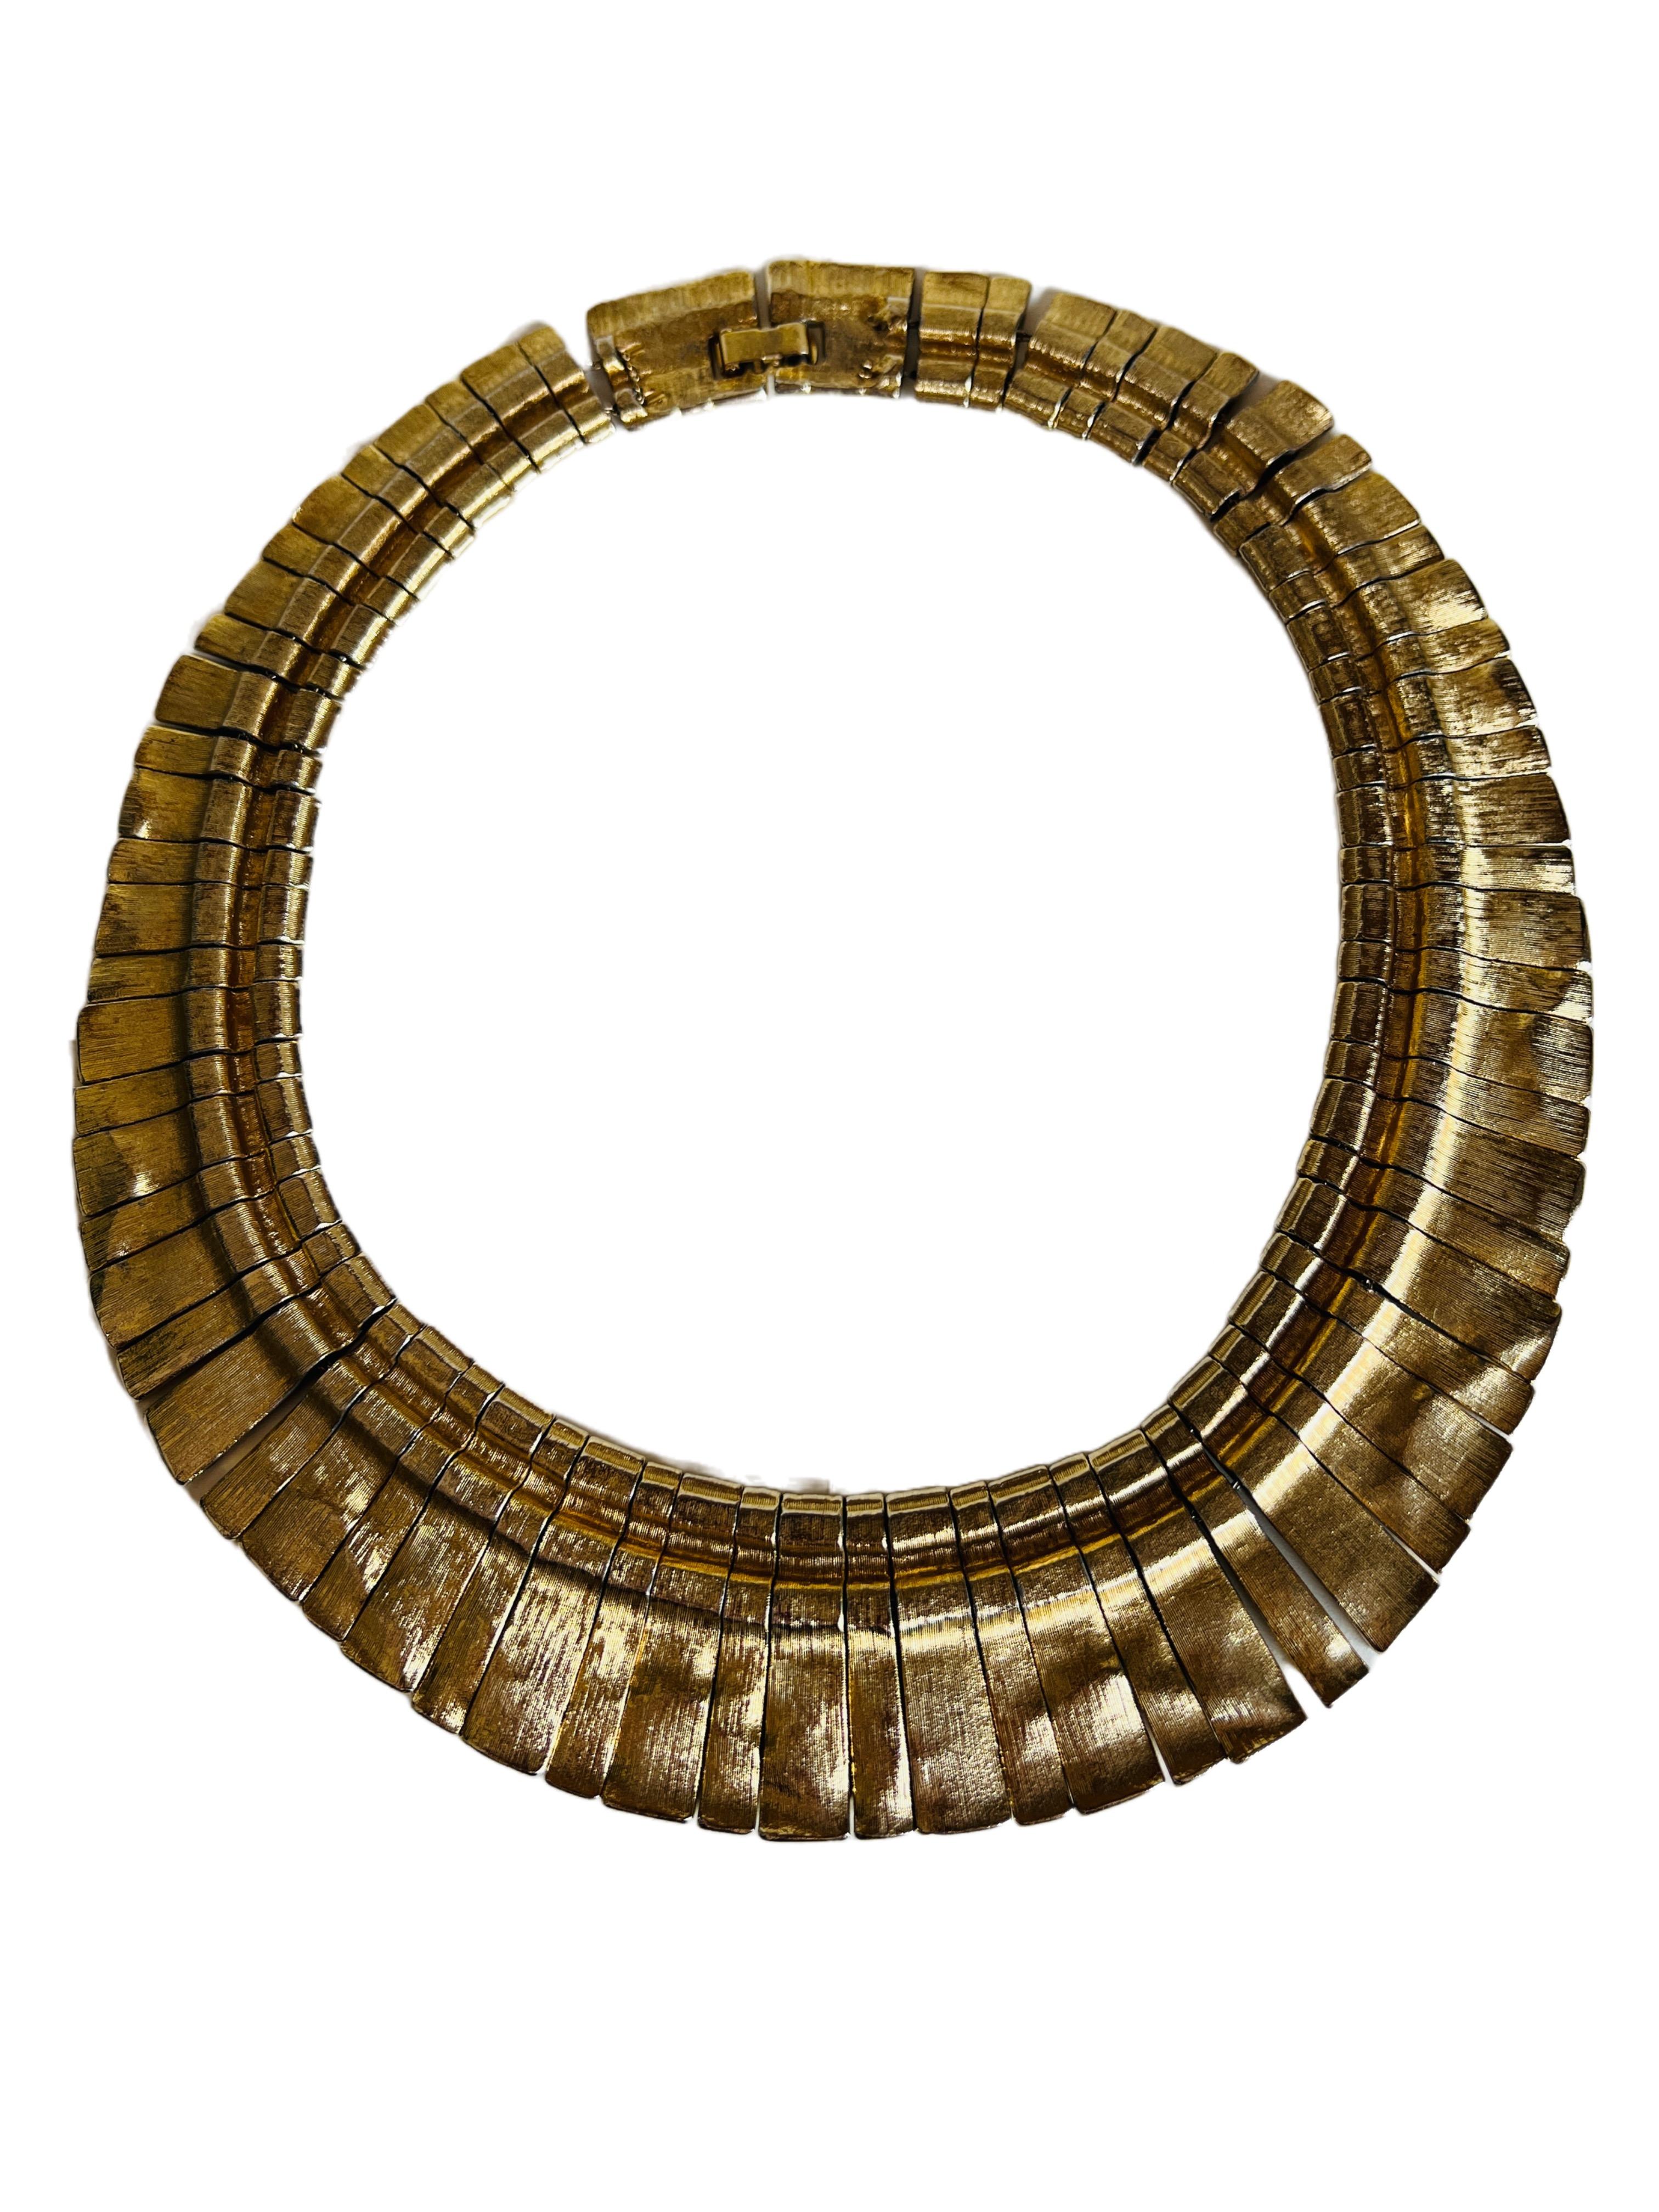 Les Bernard Egyptian Revival Pale Gold Brushed Choker Collar Necklace Cleopatra For Sale 1